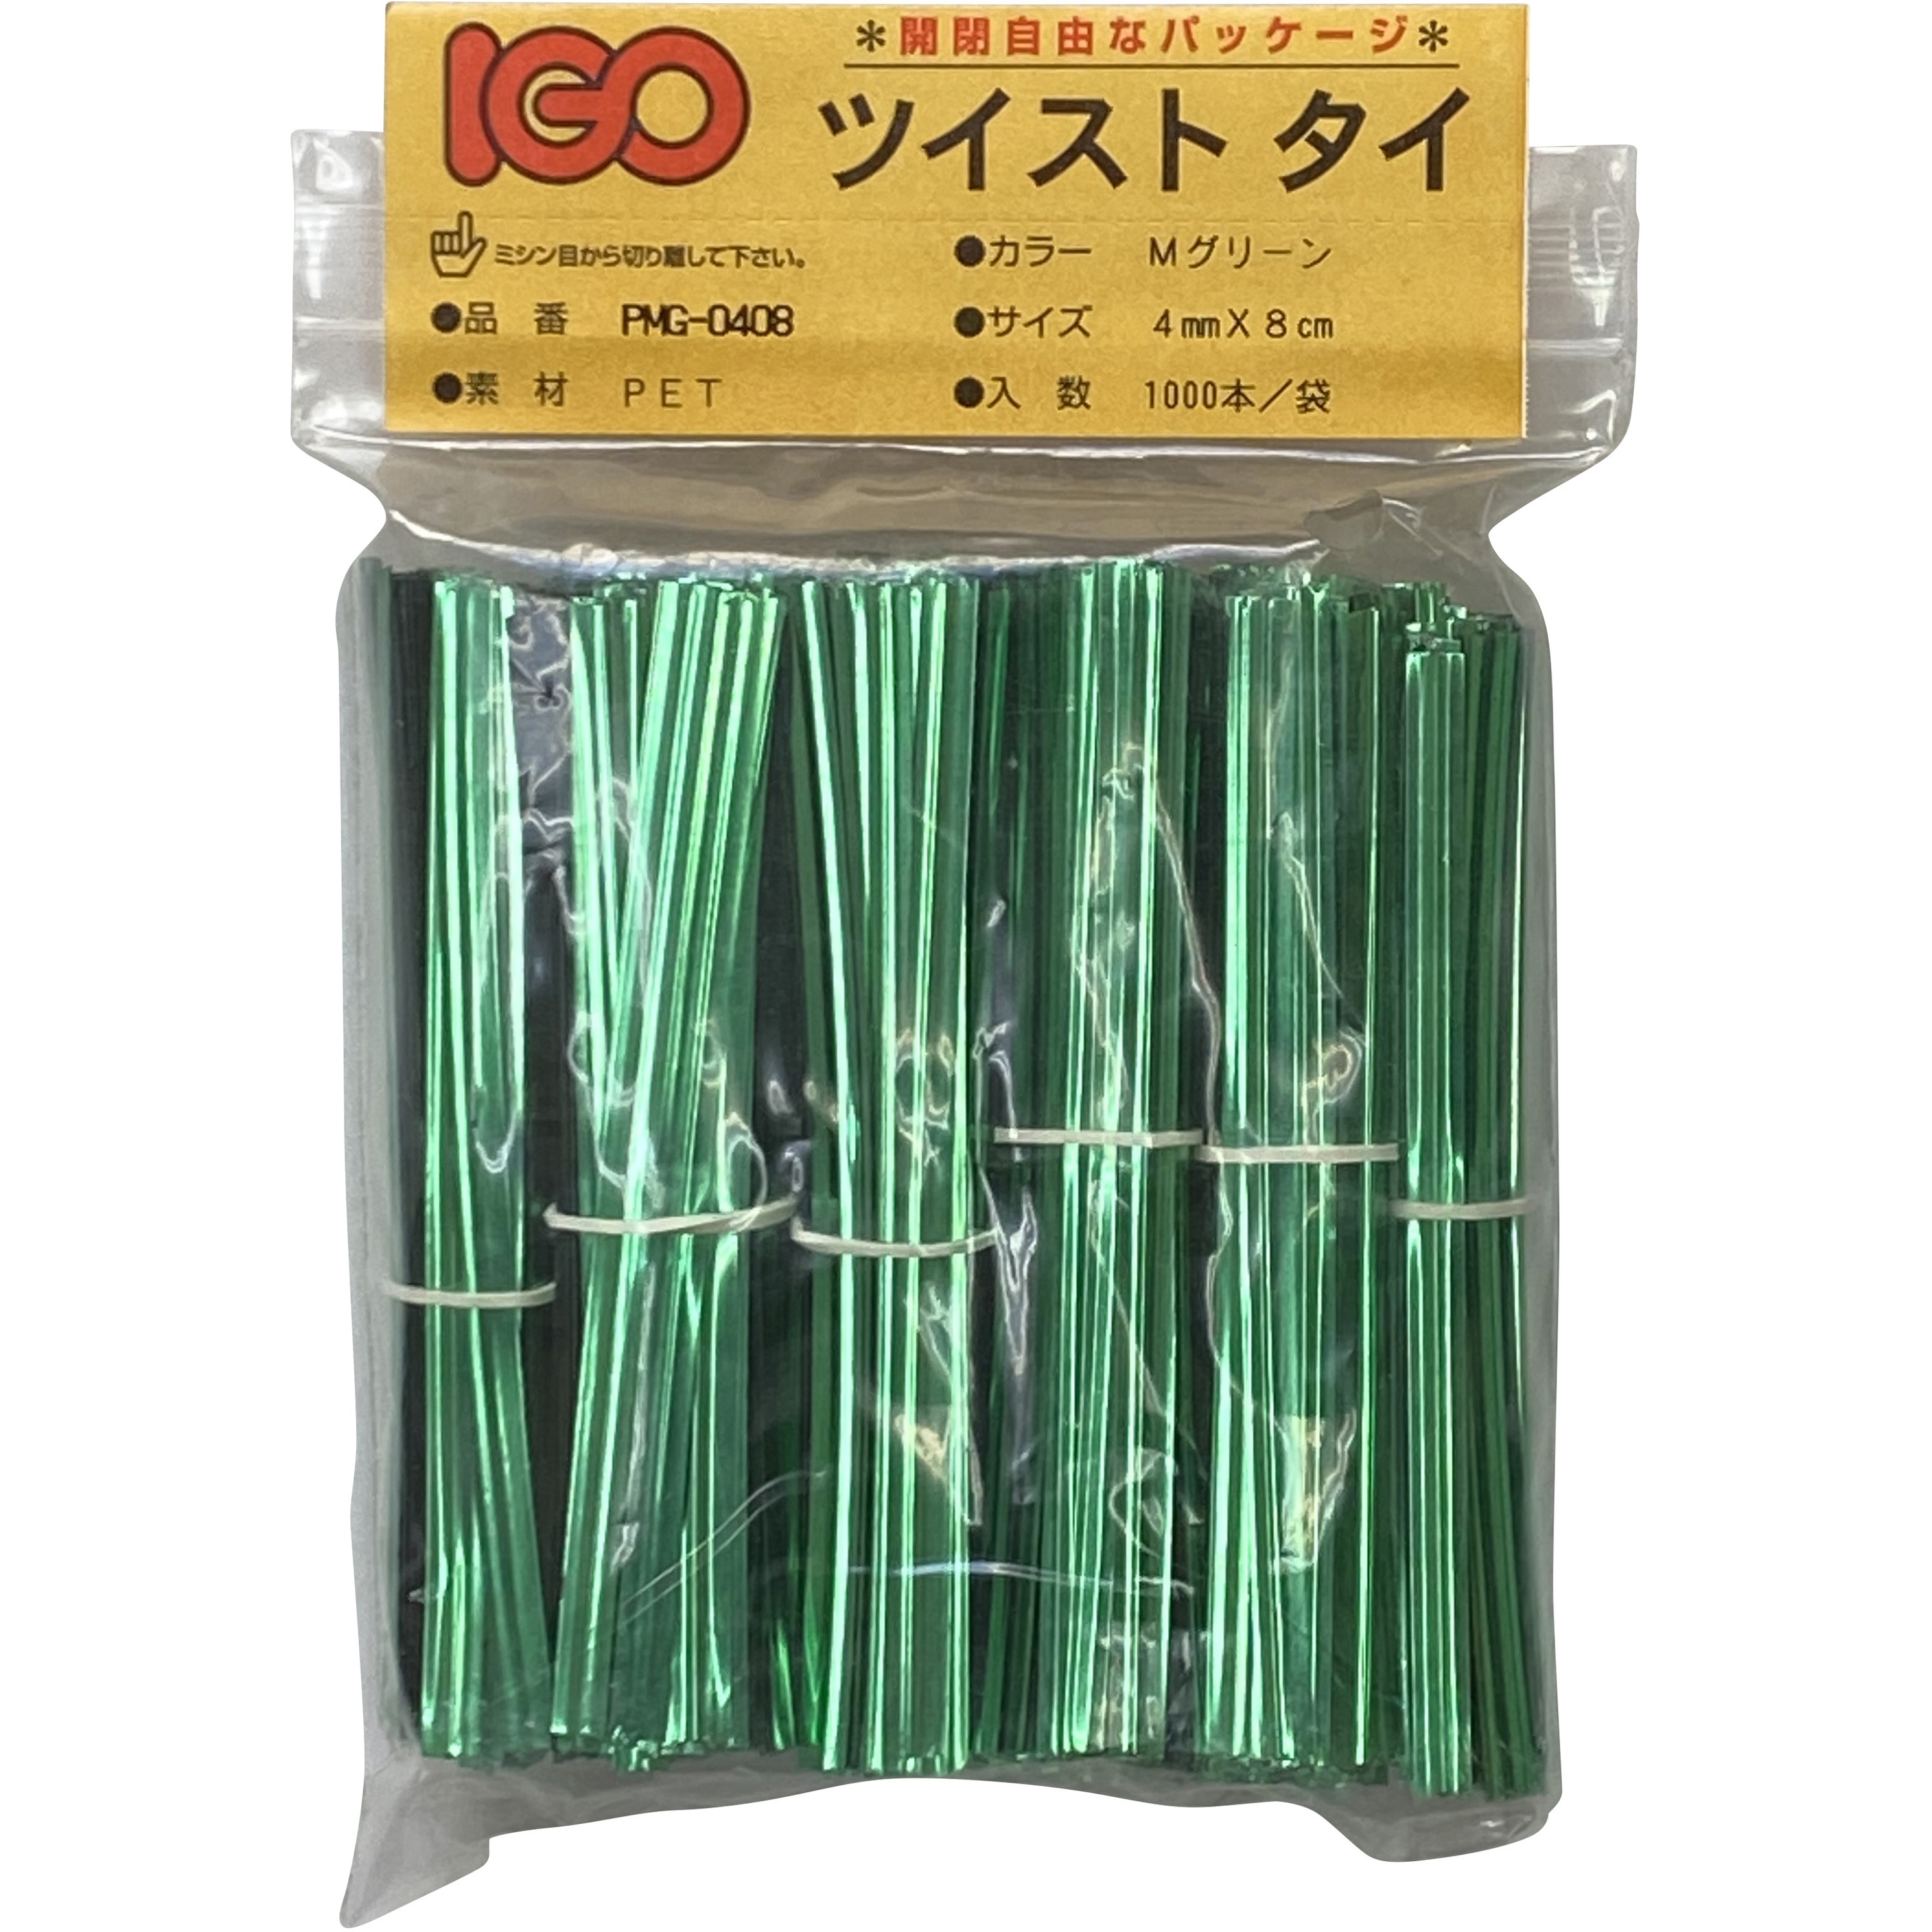 PMG-0408 IGOツイストタイ ペット・タイ カット品 1袋(1000本) IGO